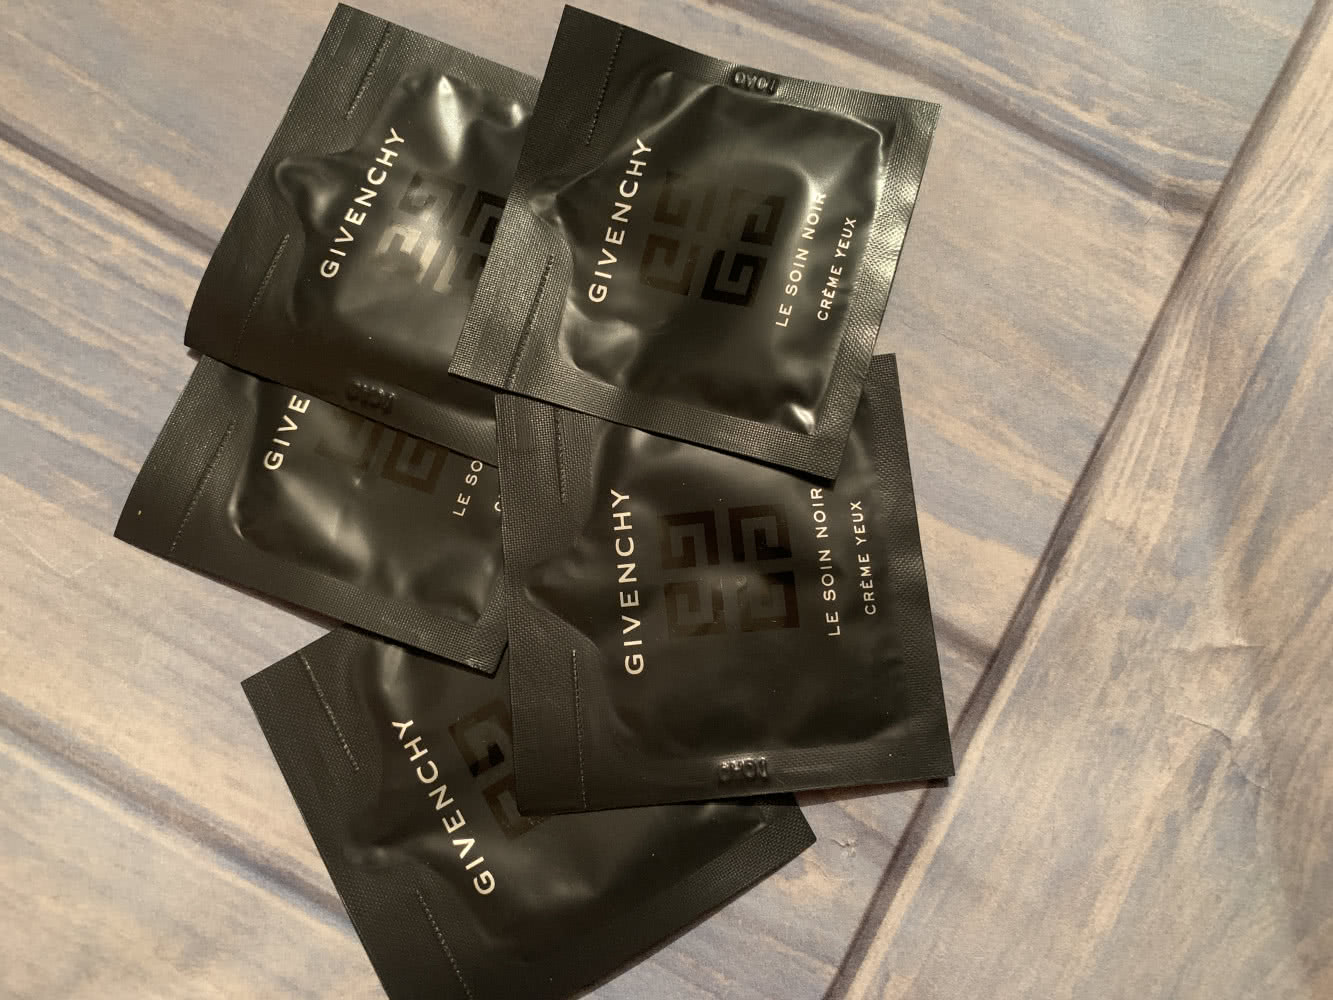 Givenchy, Le Soin Noir Creme Yeux, 5*2ml